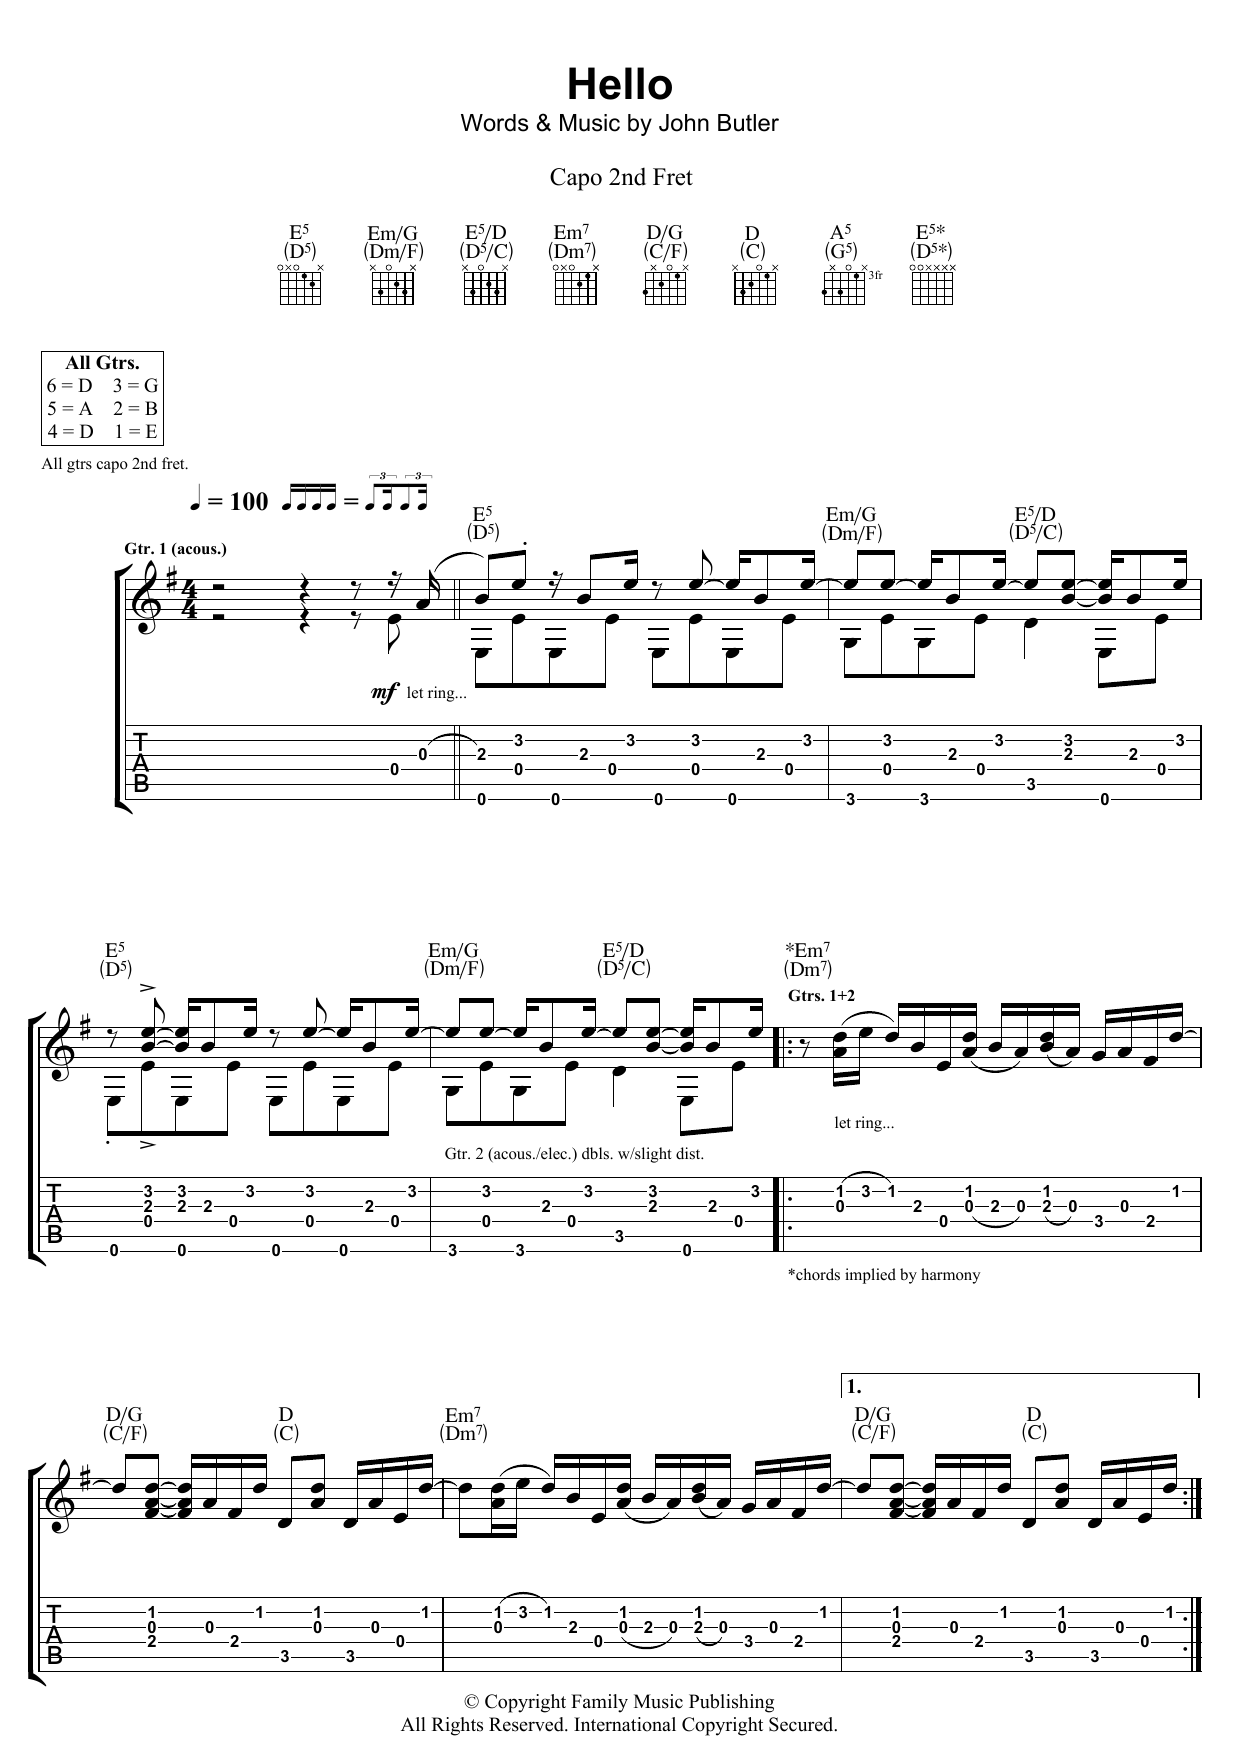 John Butler Hello Sheet Music Notes & Chords for Guitar Tab - Download or Print PDF